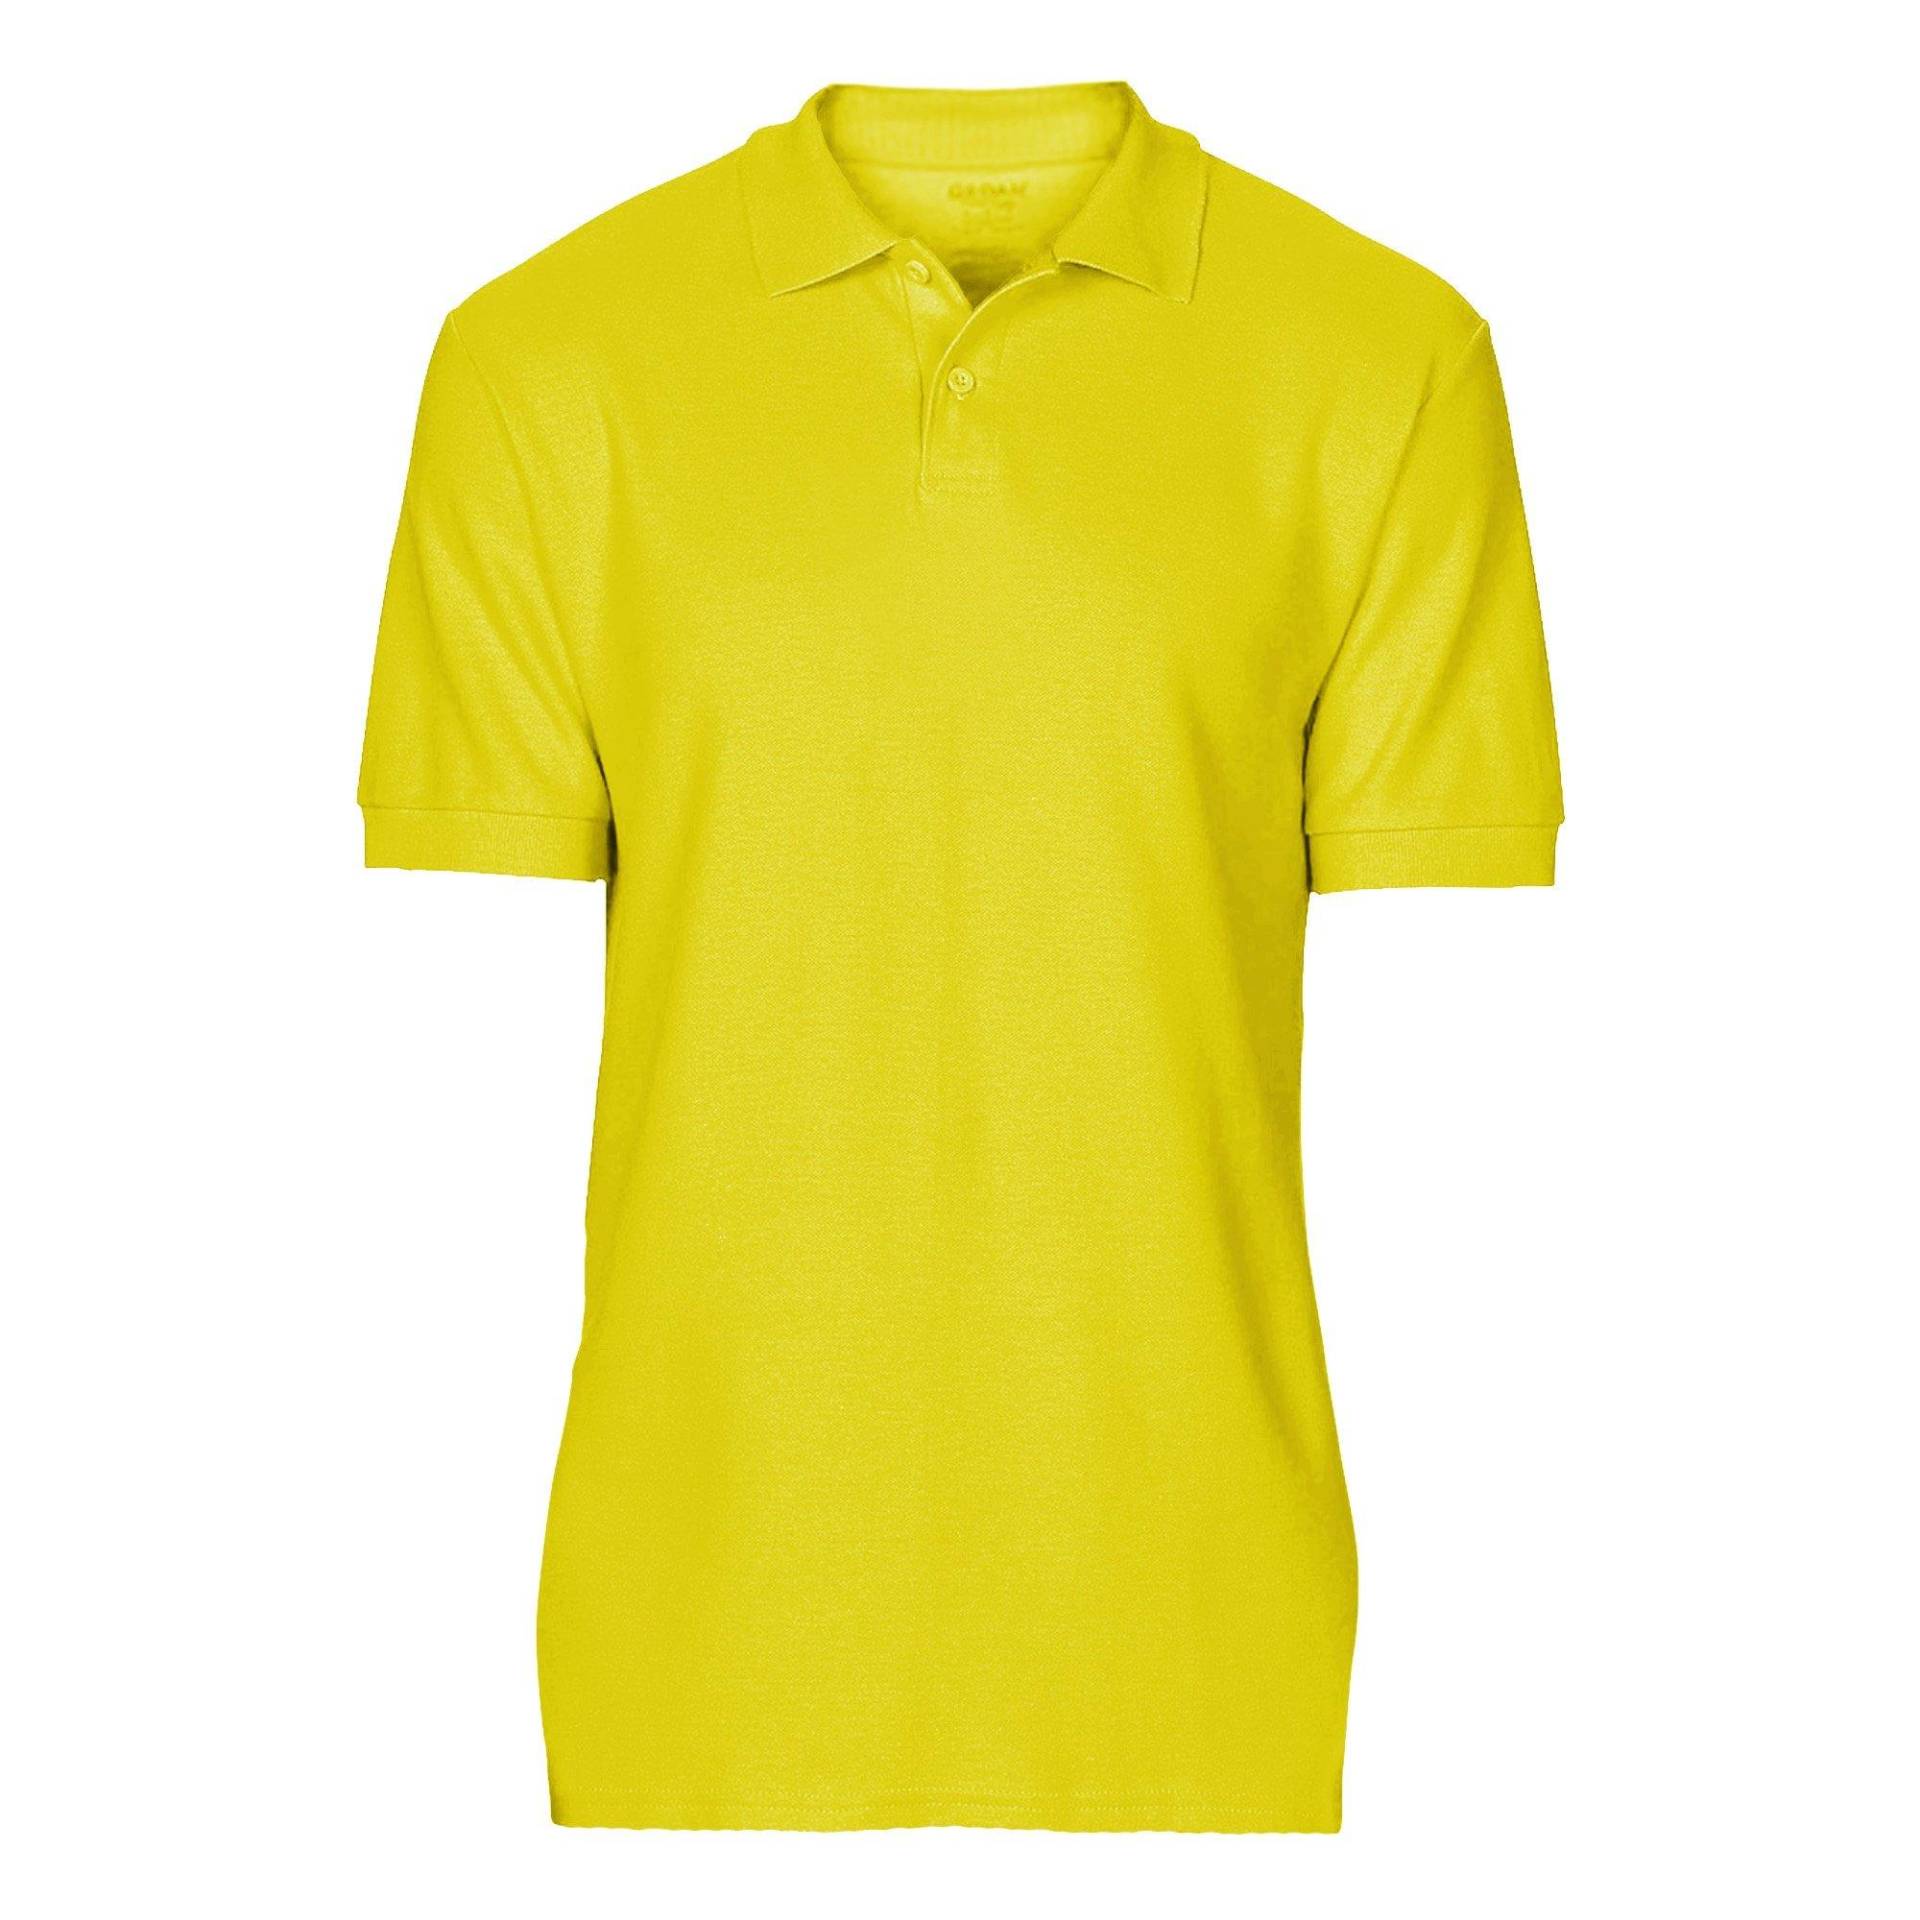 Softsyle Kurzarm Doppel Pique Polo Shirt Herren Gelb Bunt L von Gildan